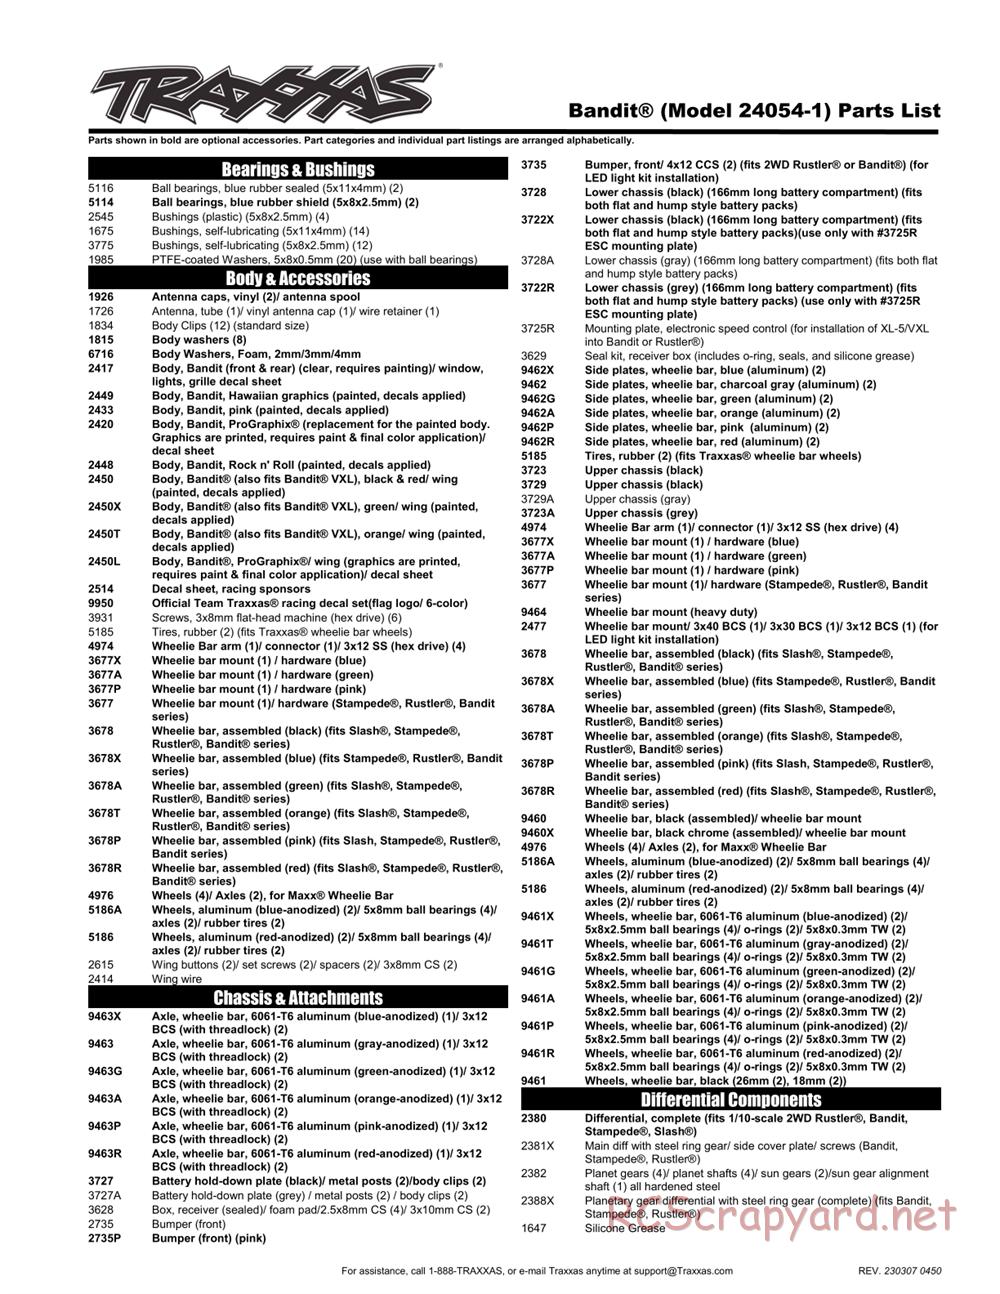 Traxxas - Bandit XL-5 (2015) - Parts List - Page 1